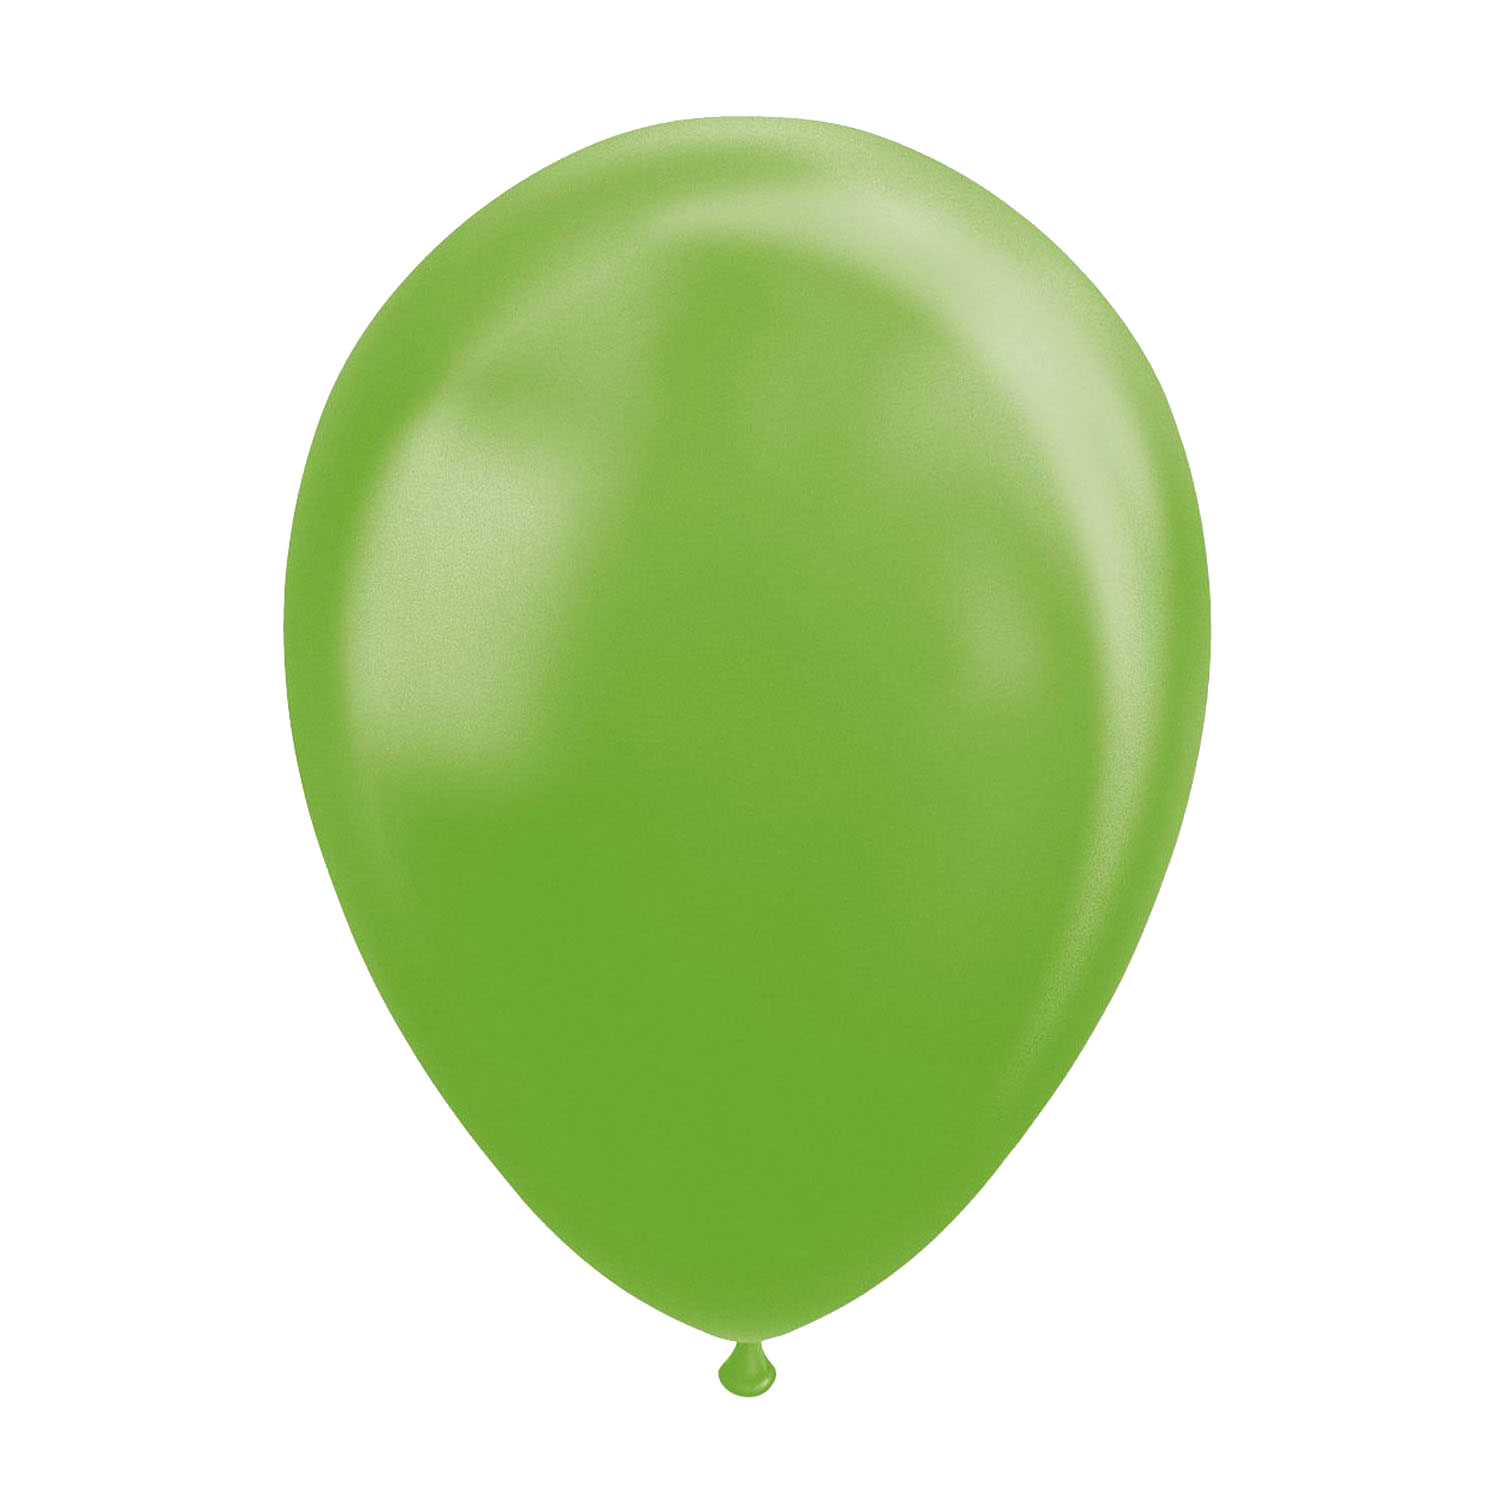 Ballons Vert Citron 30cm, 10pcs.